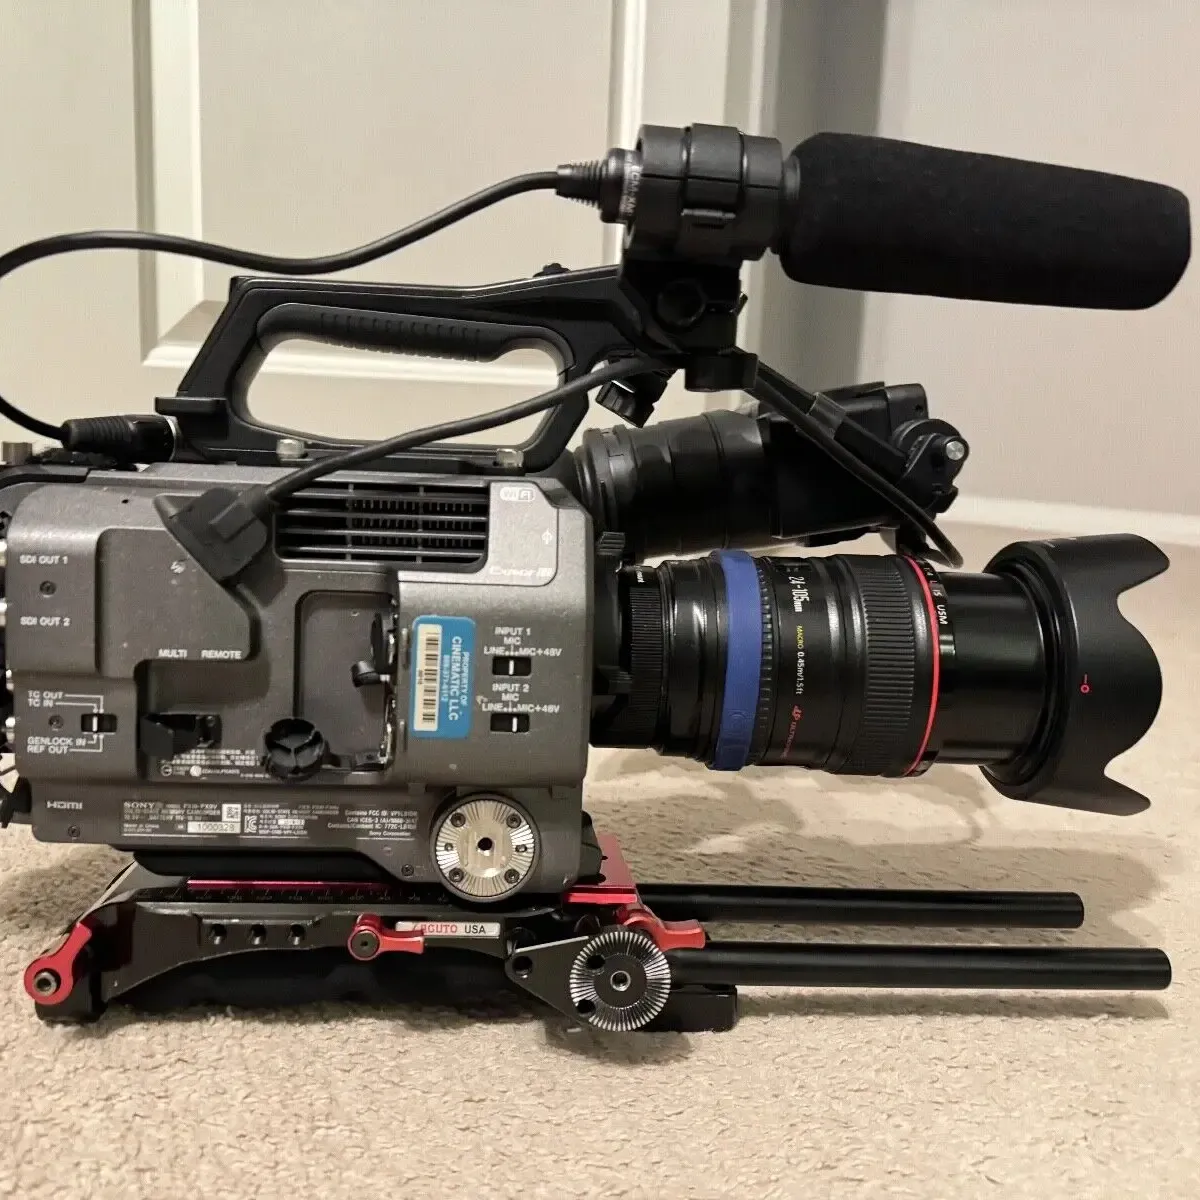 PXW-FX9 asli terbaru XDCAM 6K kamera bingkai penuh sistem kamera perekam dan 2 lensa